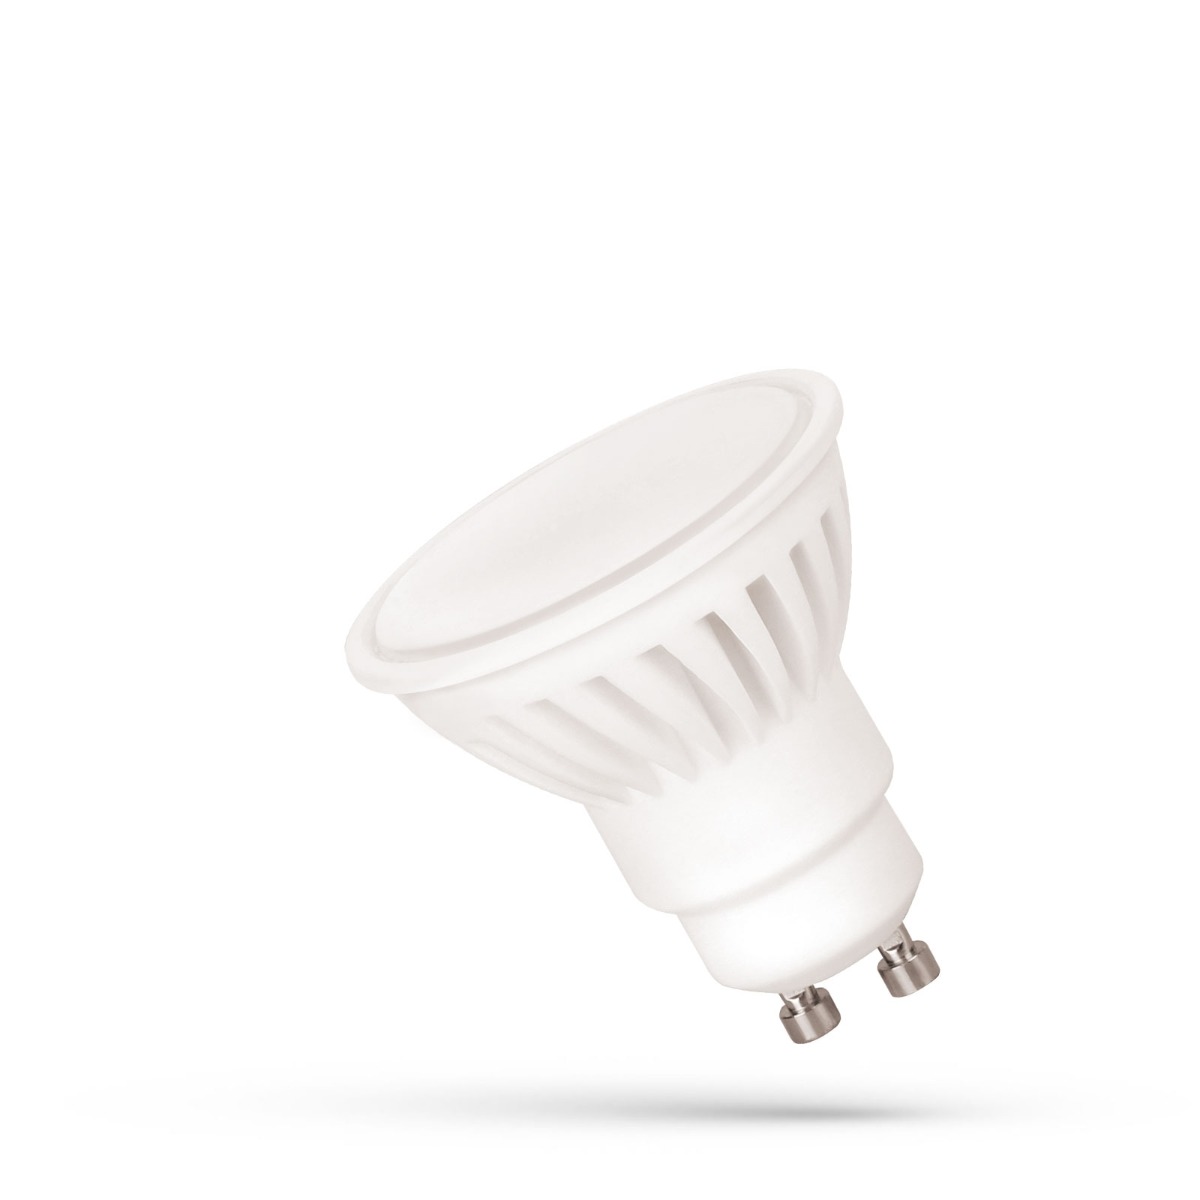 GU10 LED Light Bulb 10W with SMD Chip Ceramic